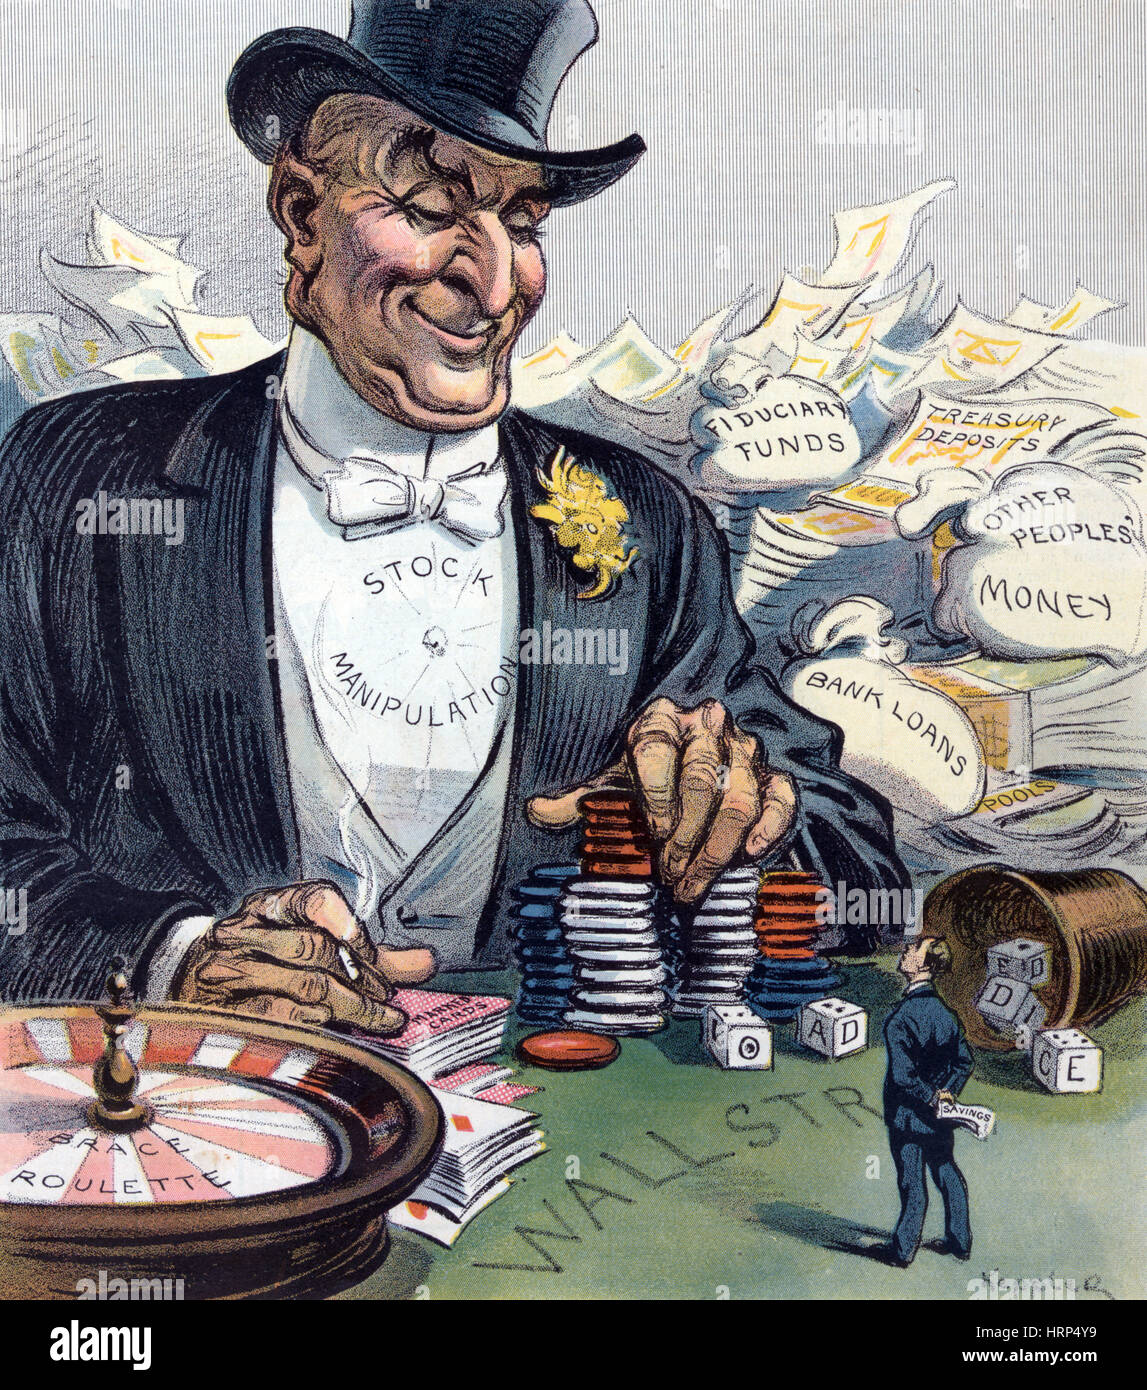 Wall Street Gambling, Stock Manipulation, 1908 Stock Photo